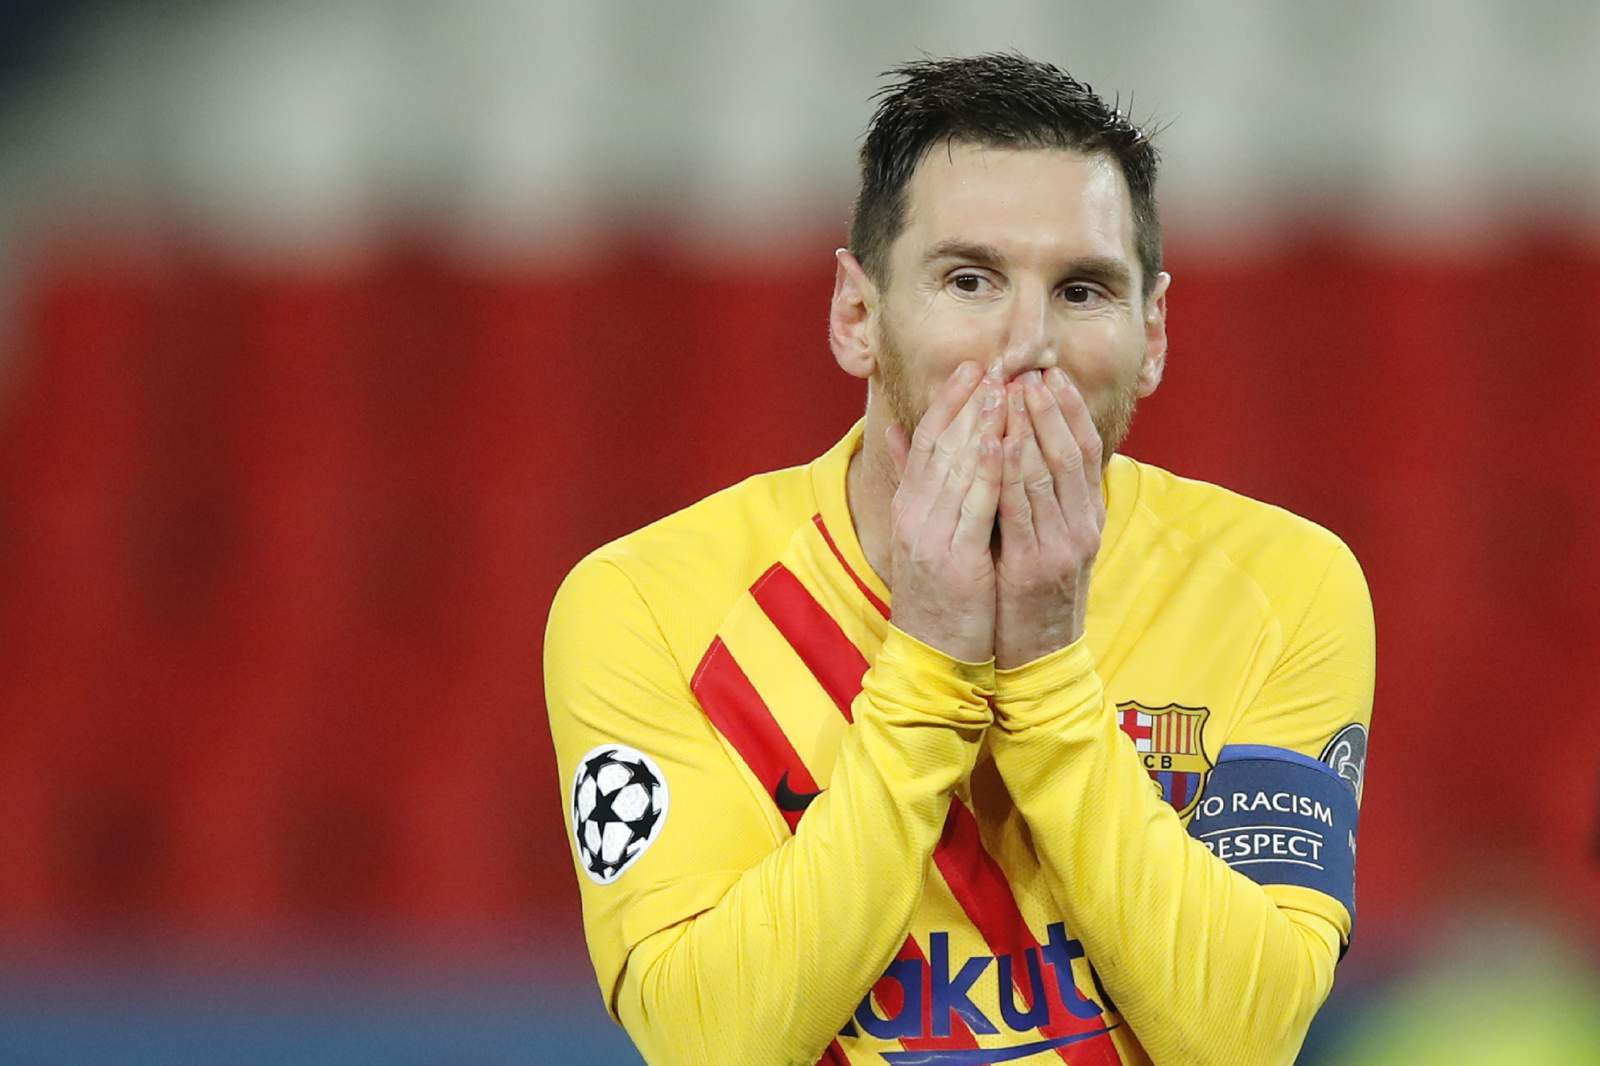 Quarterfinal streak ends as Messi, Ronaldo both eliminated